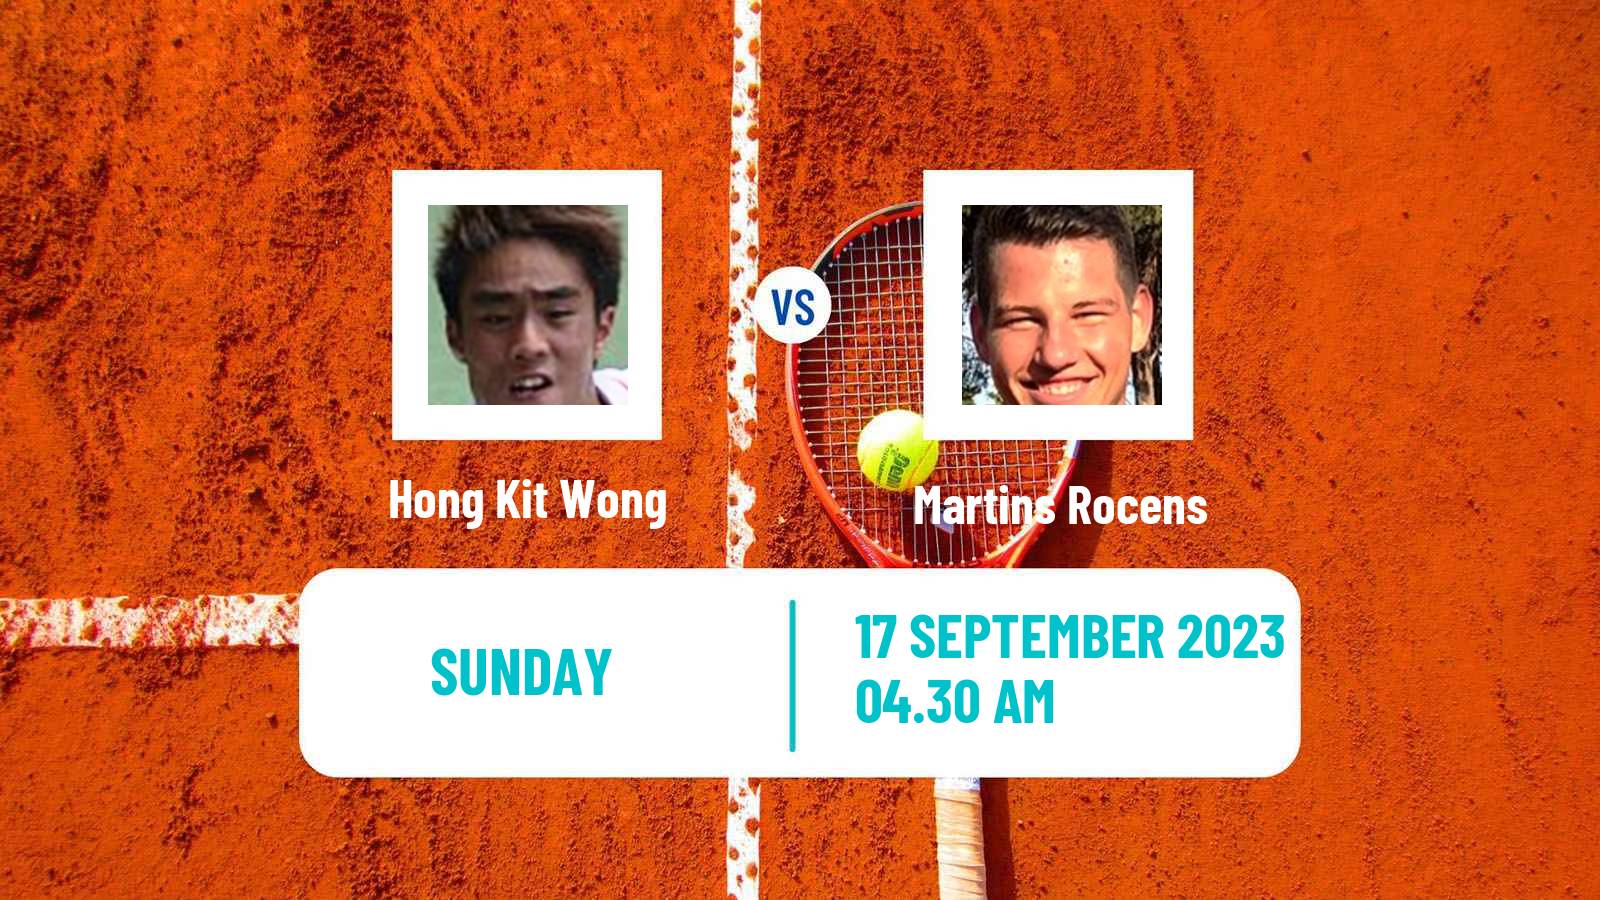 Tennis Davis Cup World Group II Hong Kit Wong - Martins Rocens